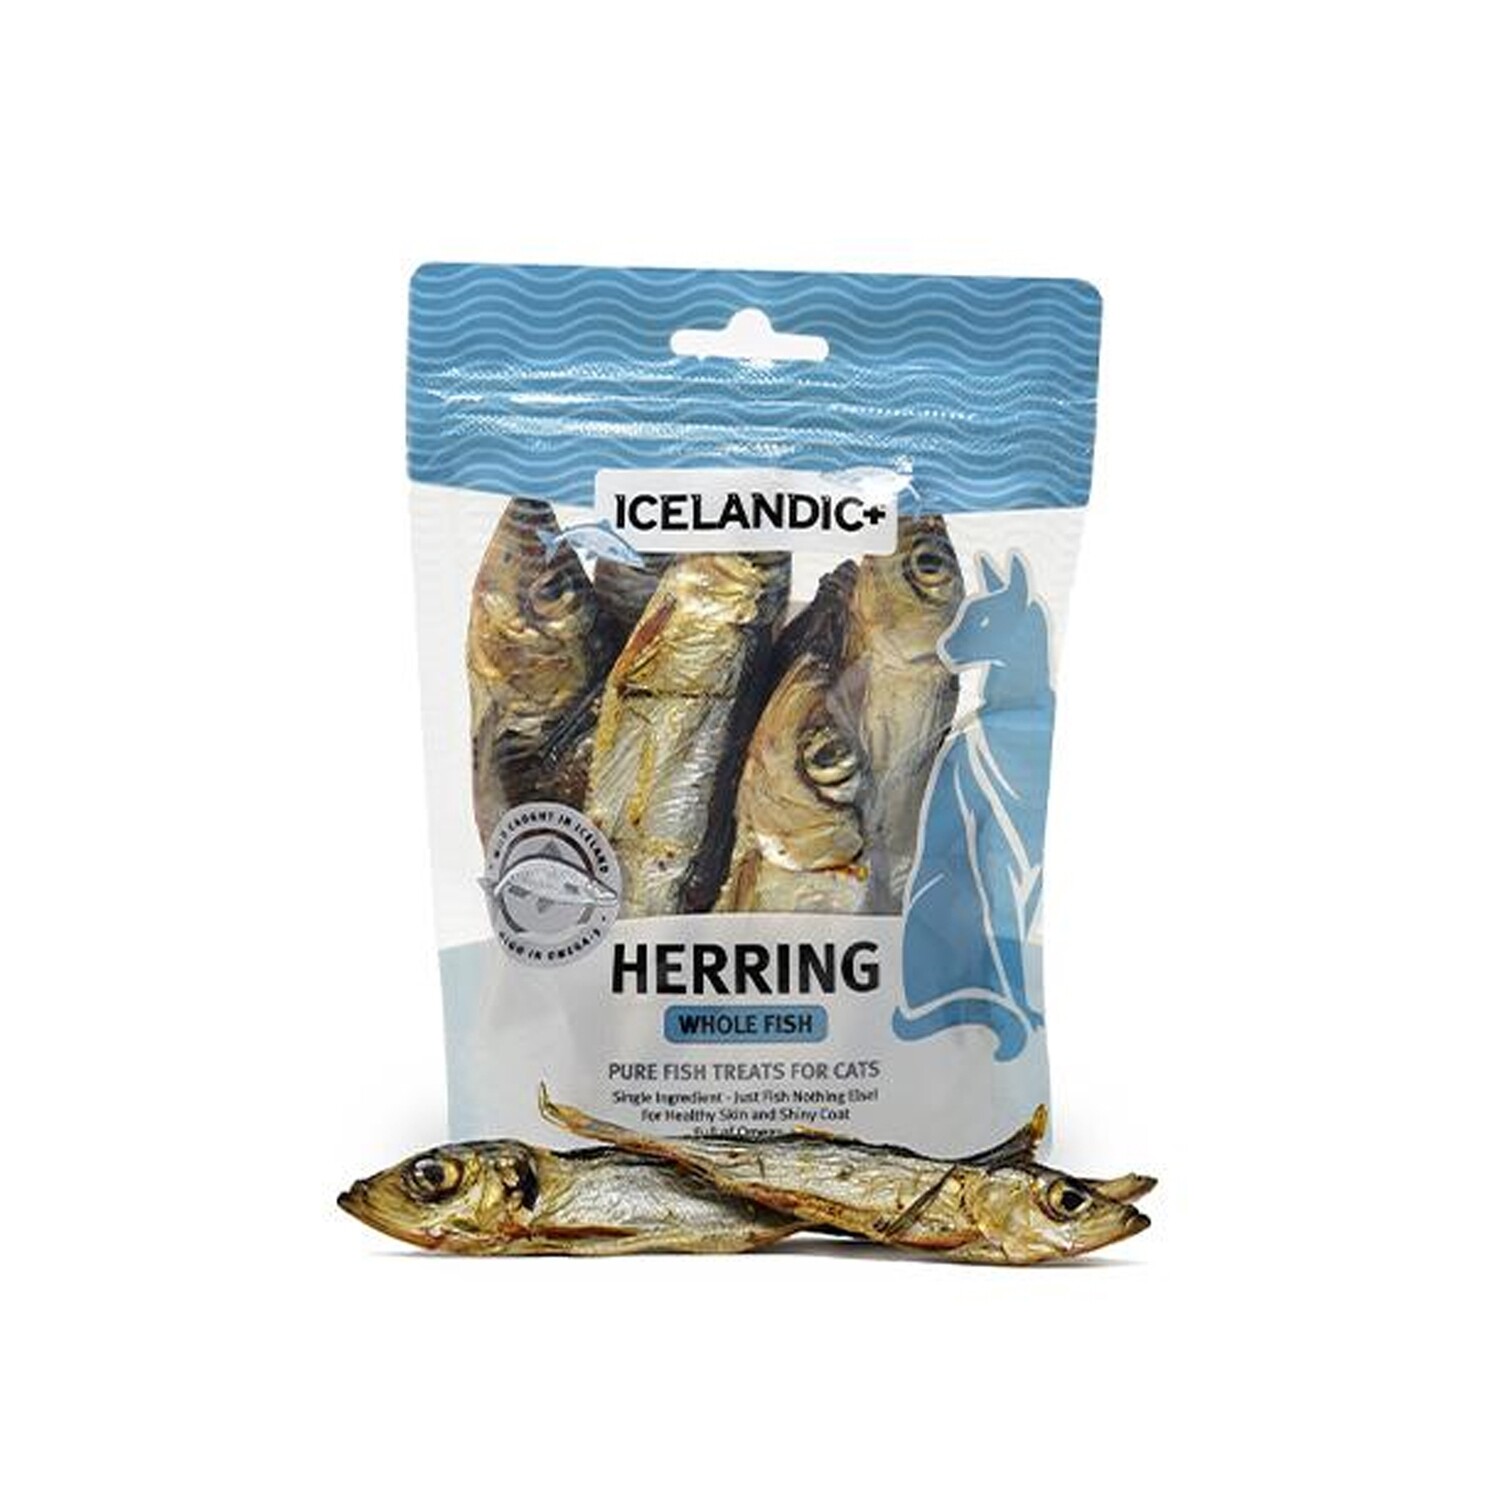 Icelandic+ Fish Treat for Cats Herring Whole Fish-1.5oz  鲱鱼全鱼猫咪零食